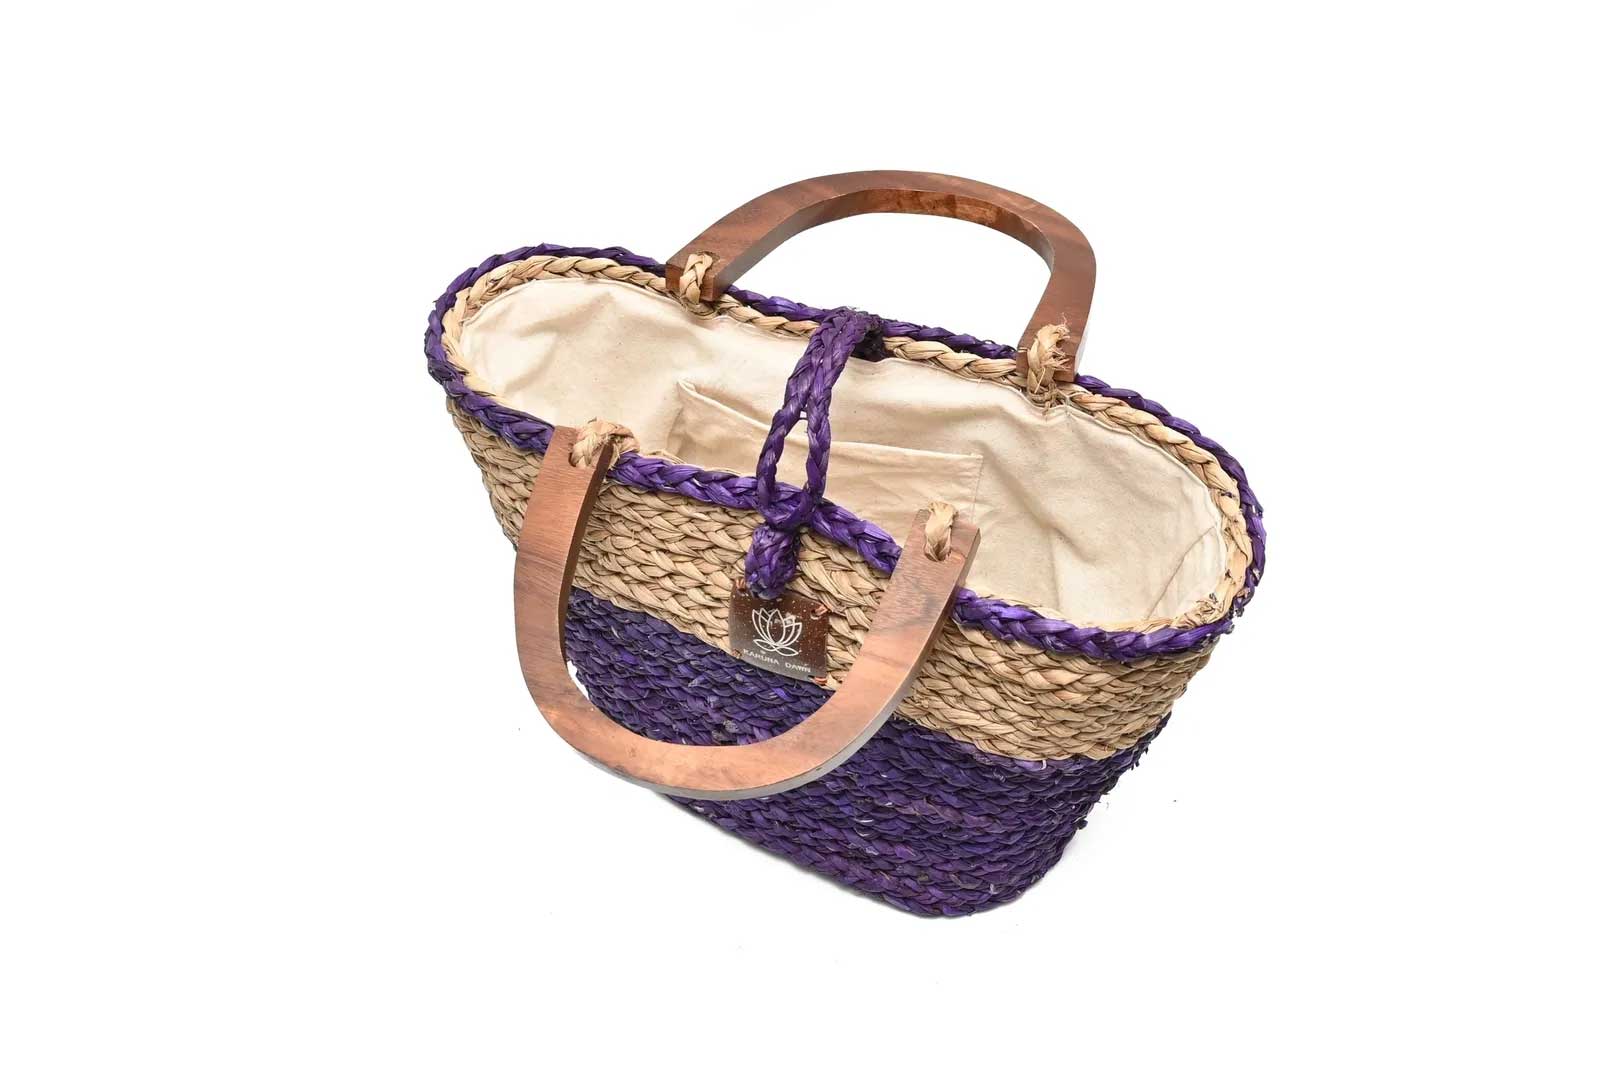 Wooden Handle Bag - Purple & Natural-Karuna Dawn-stride